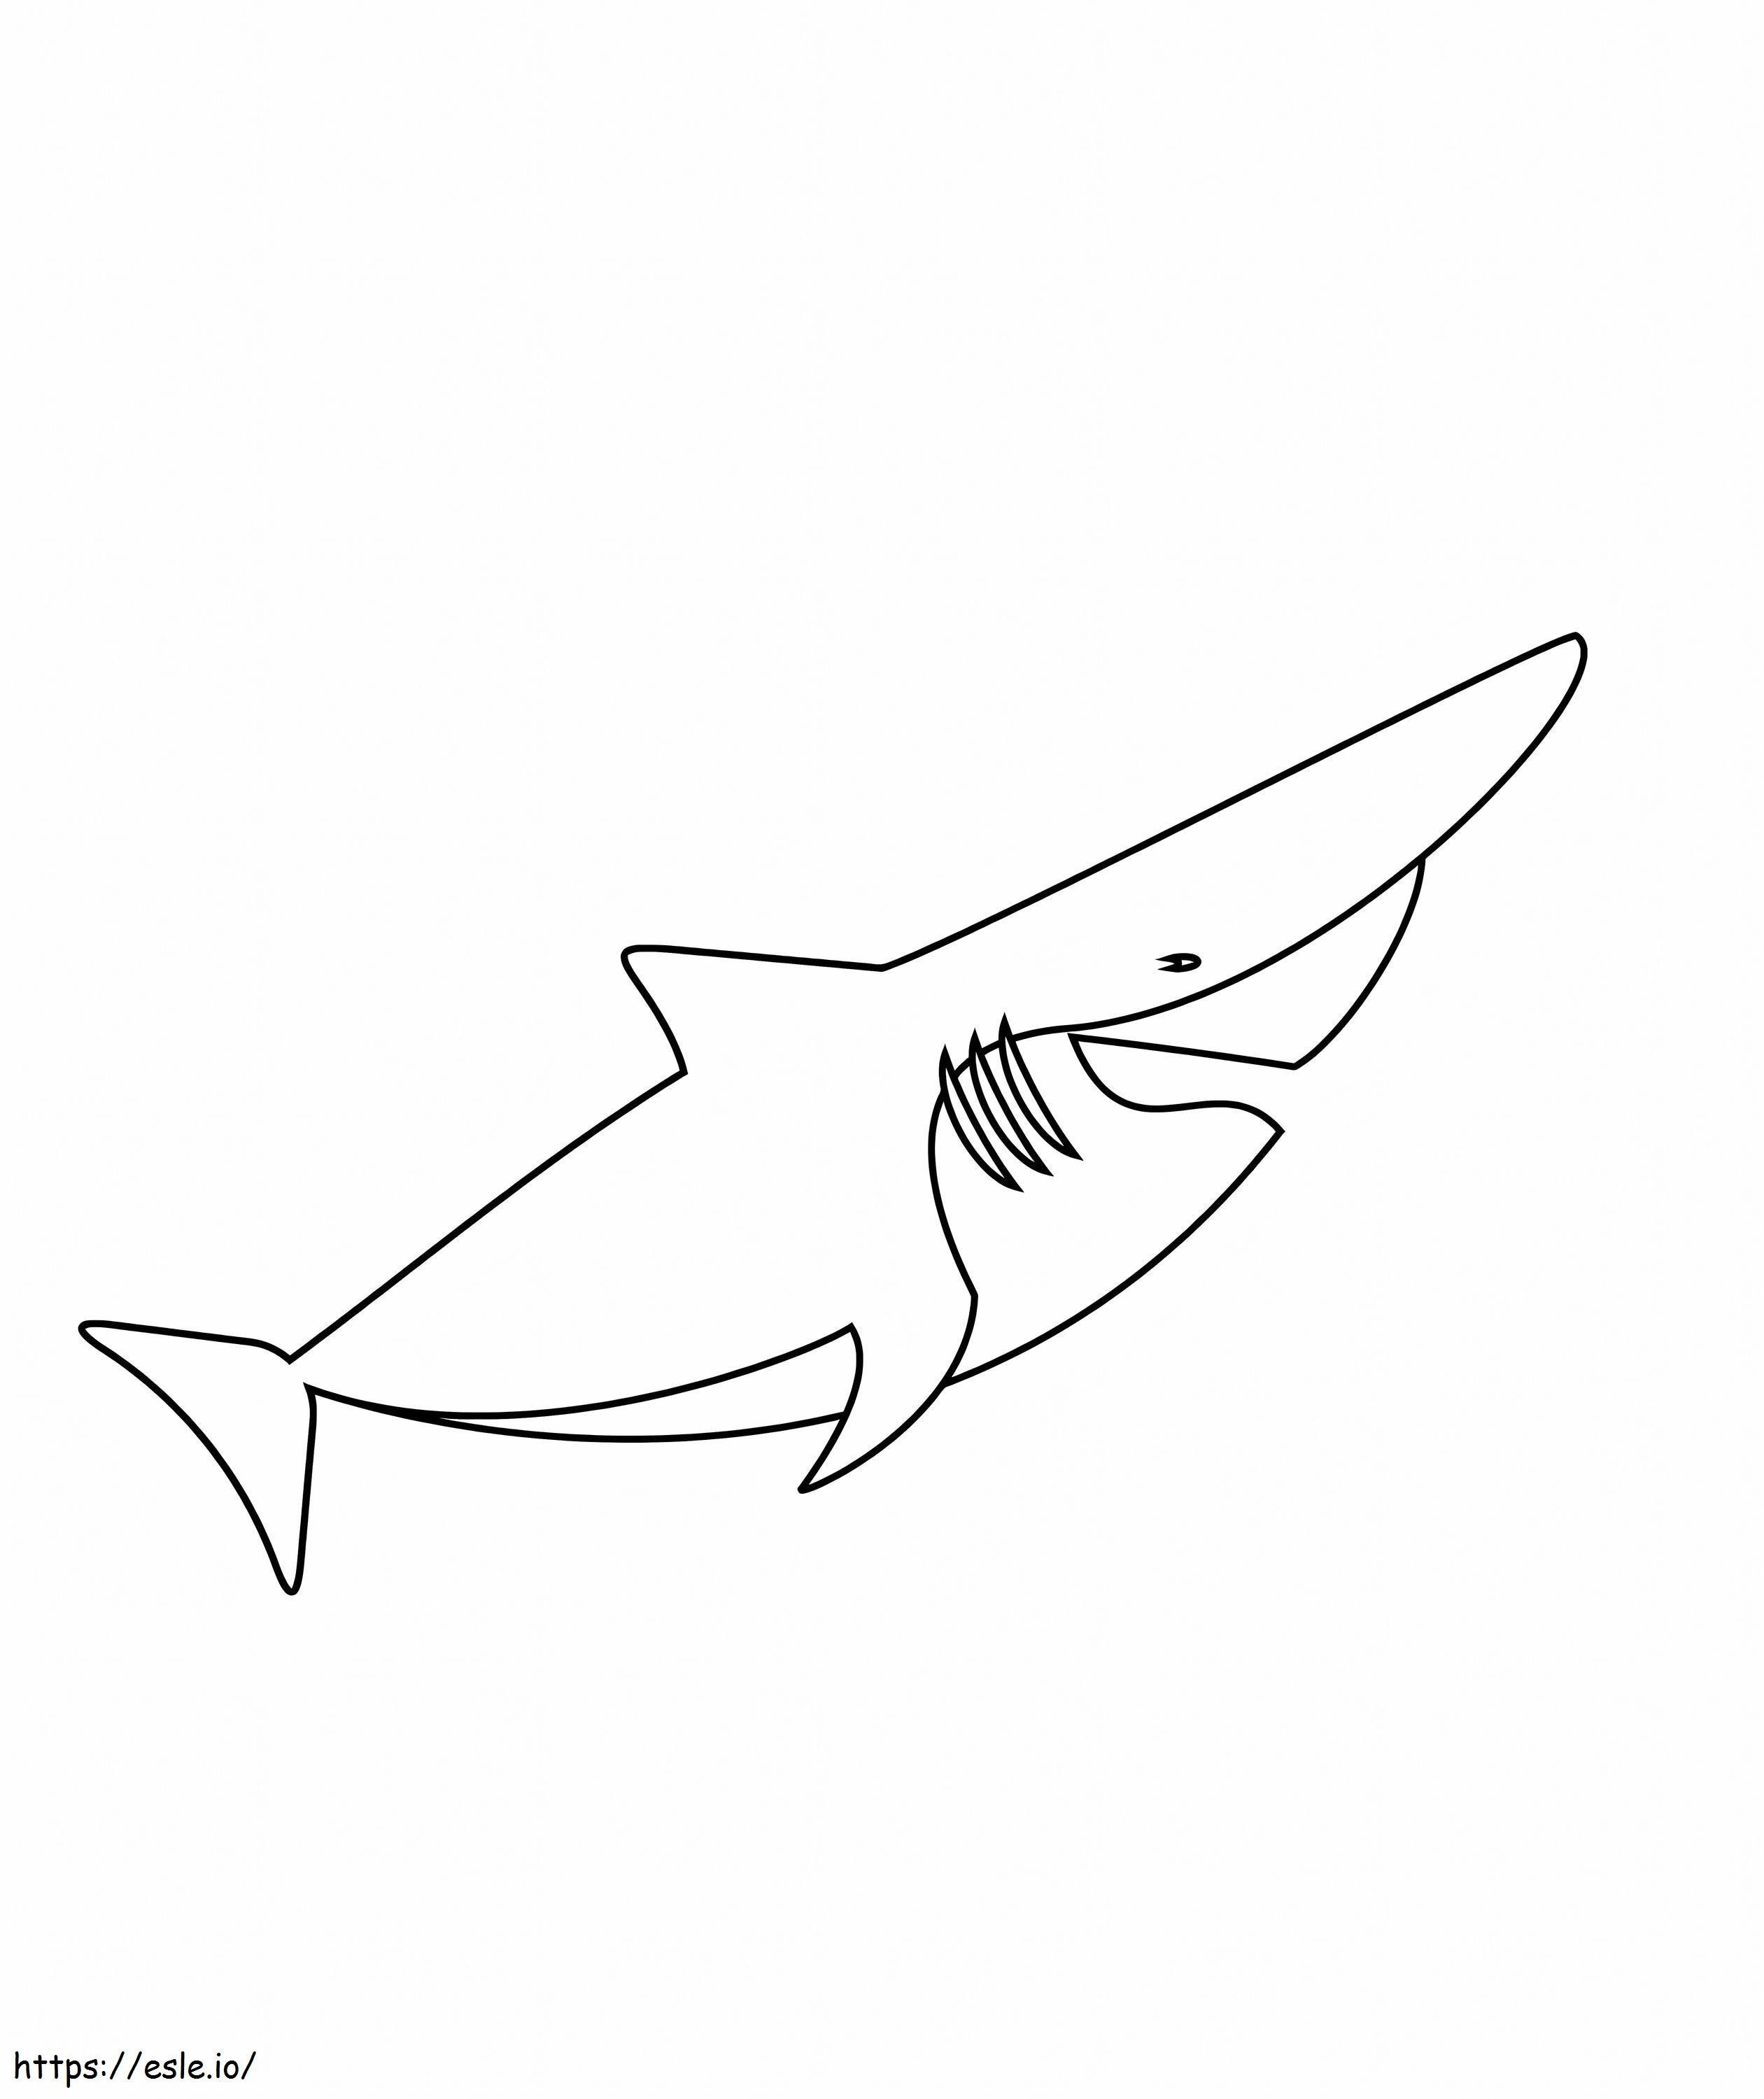 Tiburon Duende coloring page